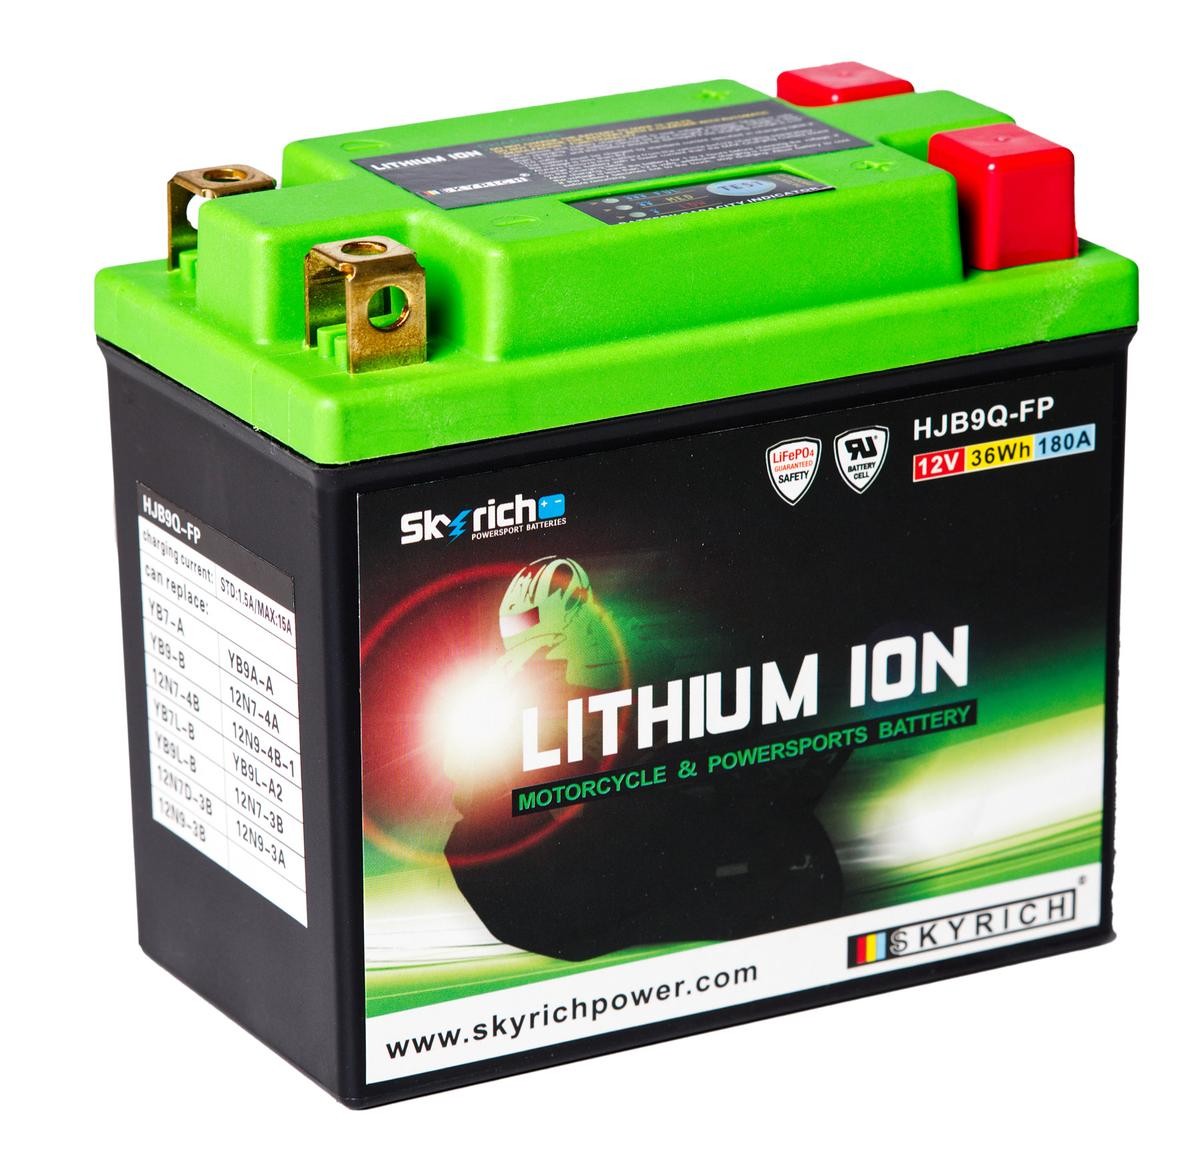 APRILIA TUAREG Batterie 12V 3Ah 180A N Li-Ionen-Batterie SKYRICH LITHIUM ION HJB9Q-FP